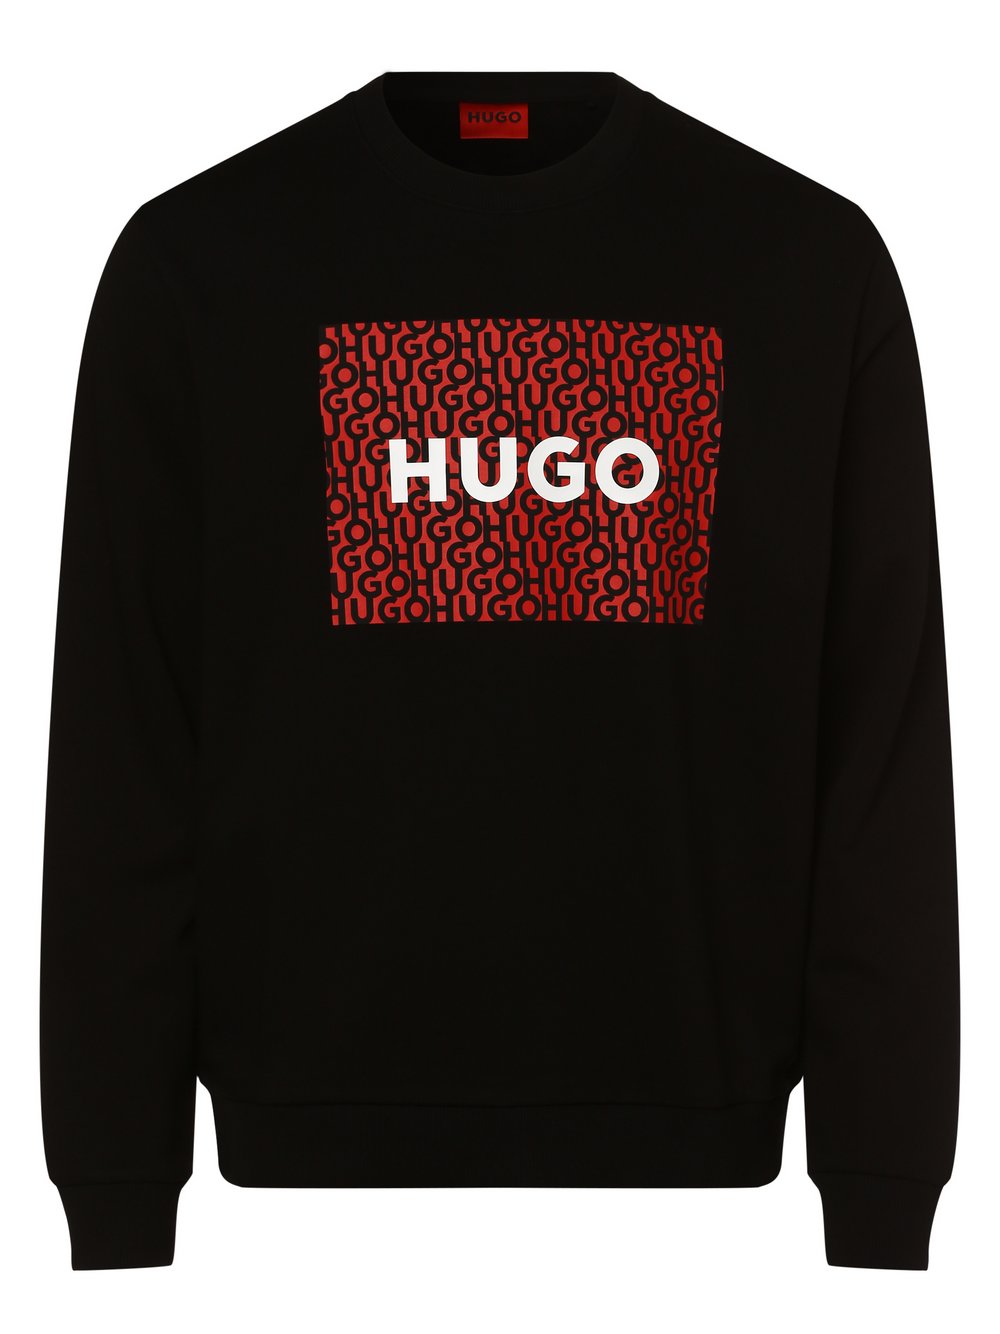 HUGO - Męska bluza nierozpinana – Dalker, czarny